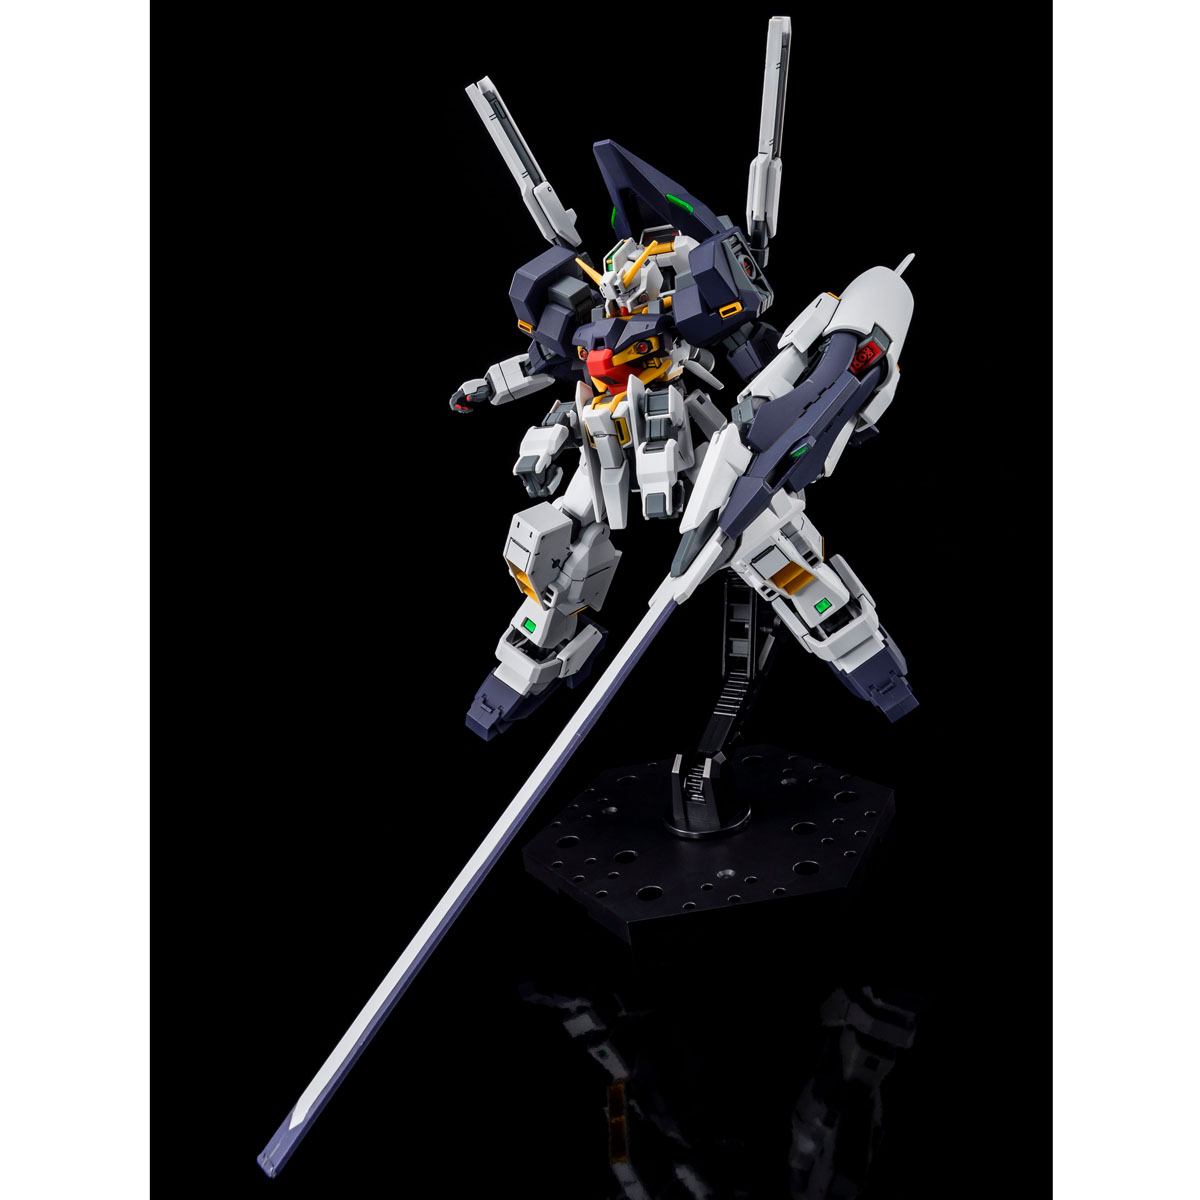 P Bandai Mobile Suit Gundam Hg 1 144 Tr 1 Haze N Thley Advance Of Z The Flag Toys Hobbies Models Kits